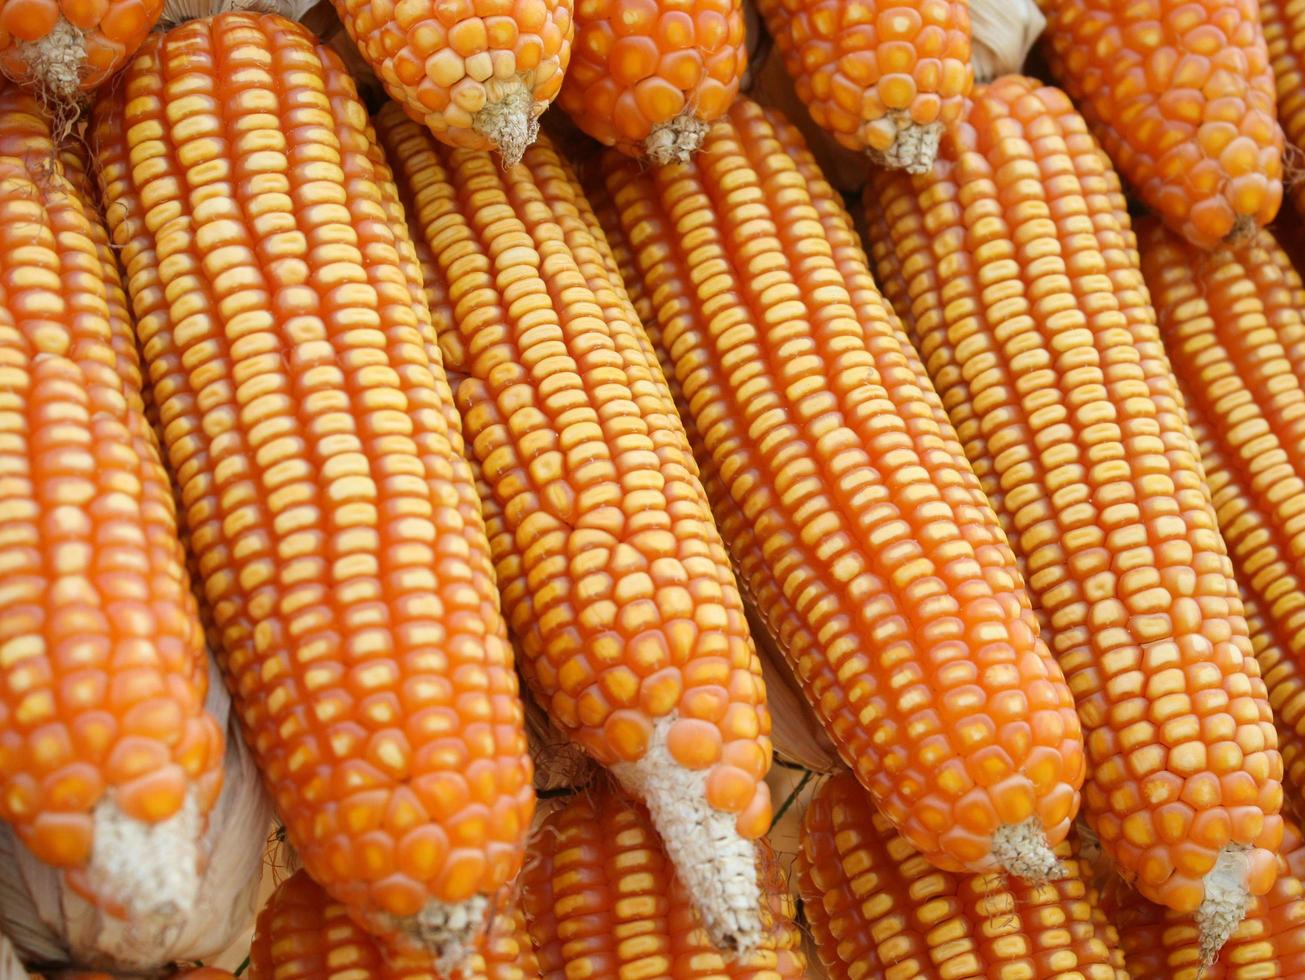 Piles of sweet corn photo